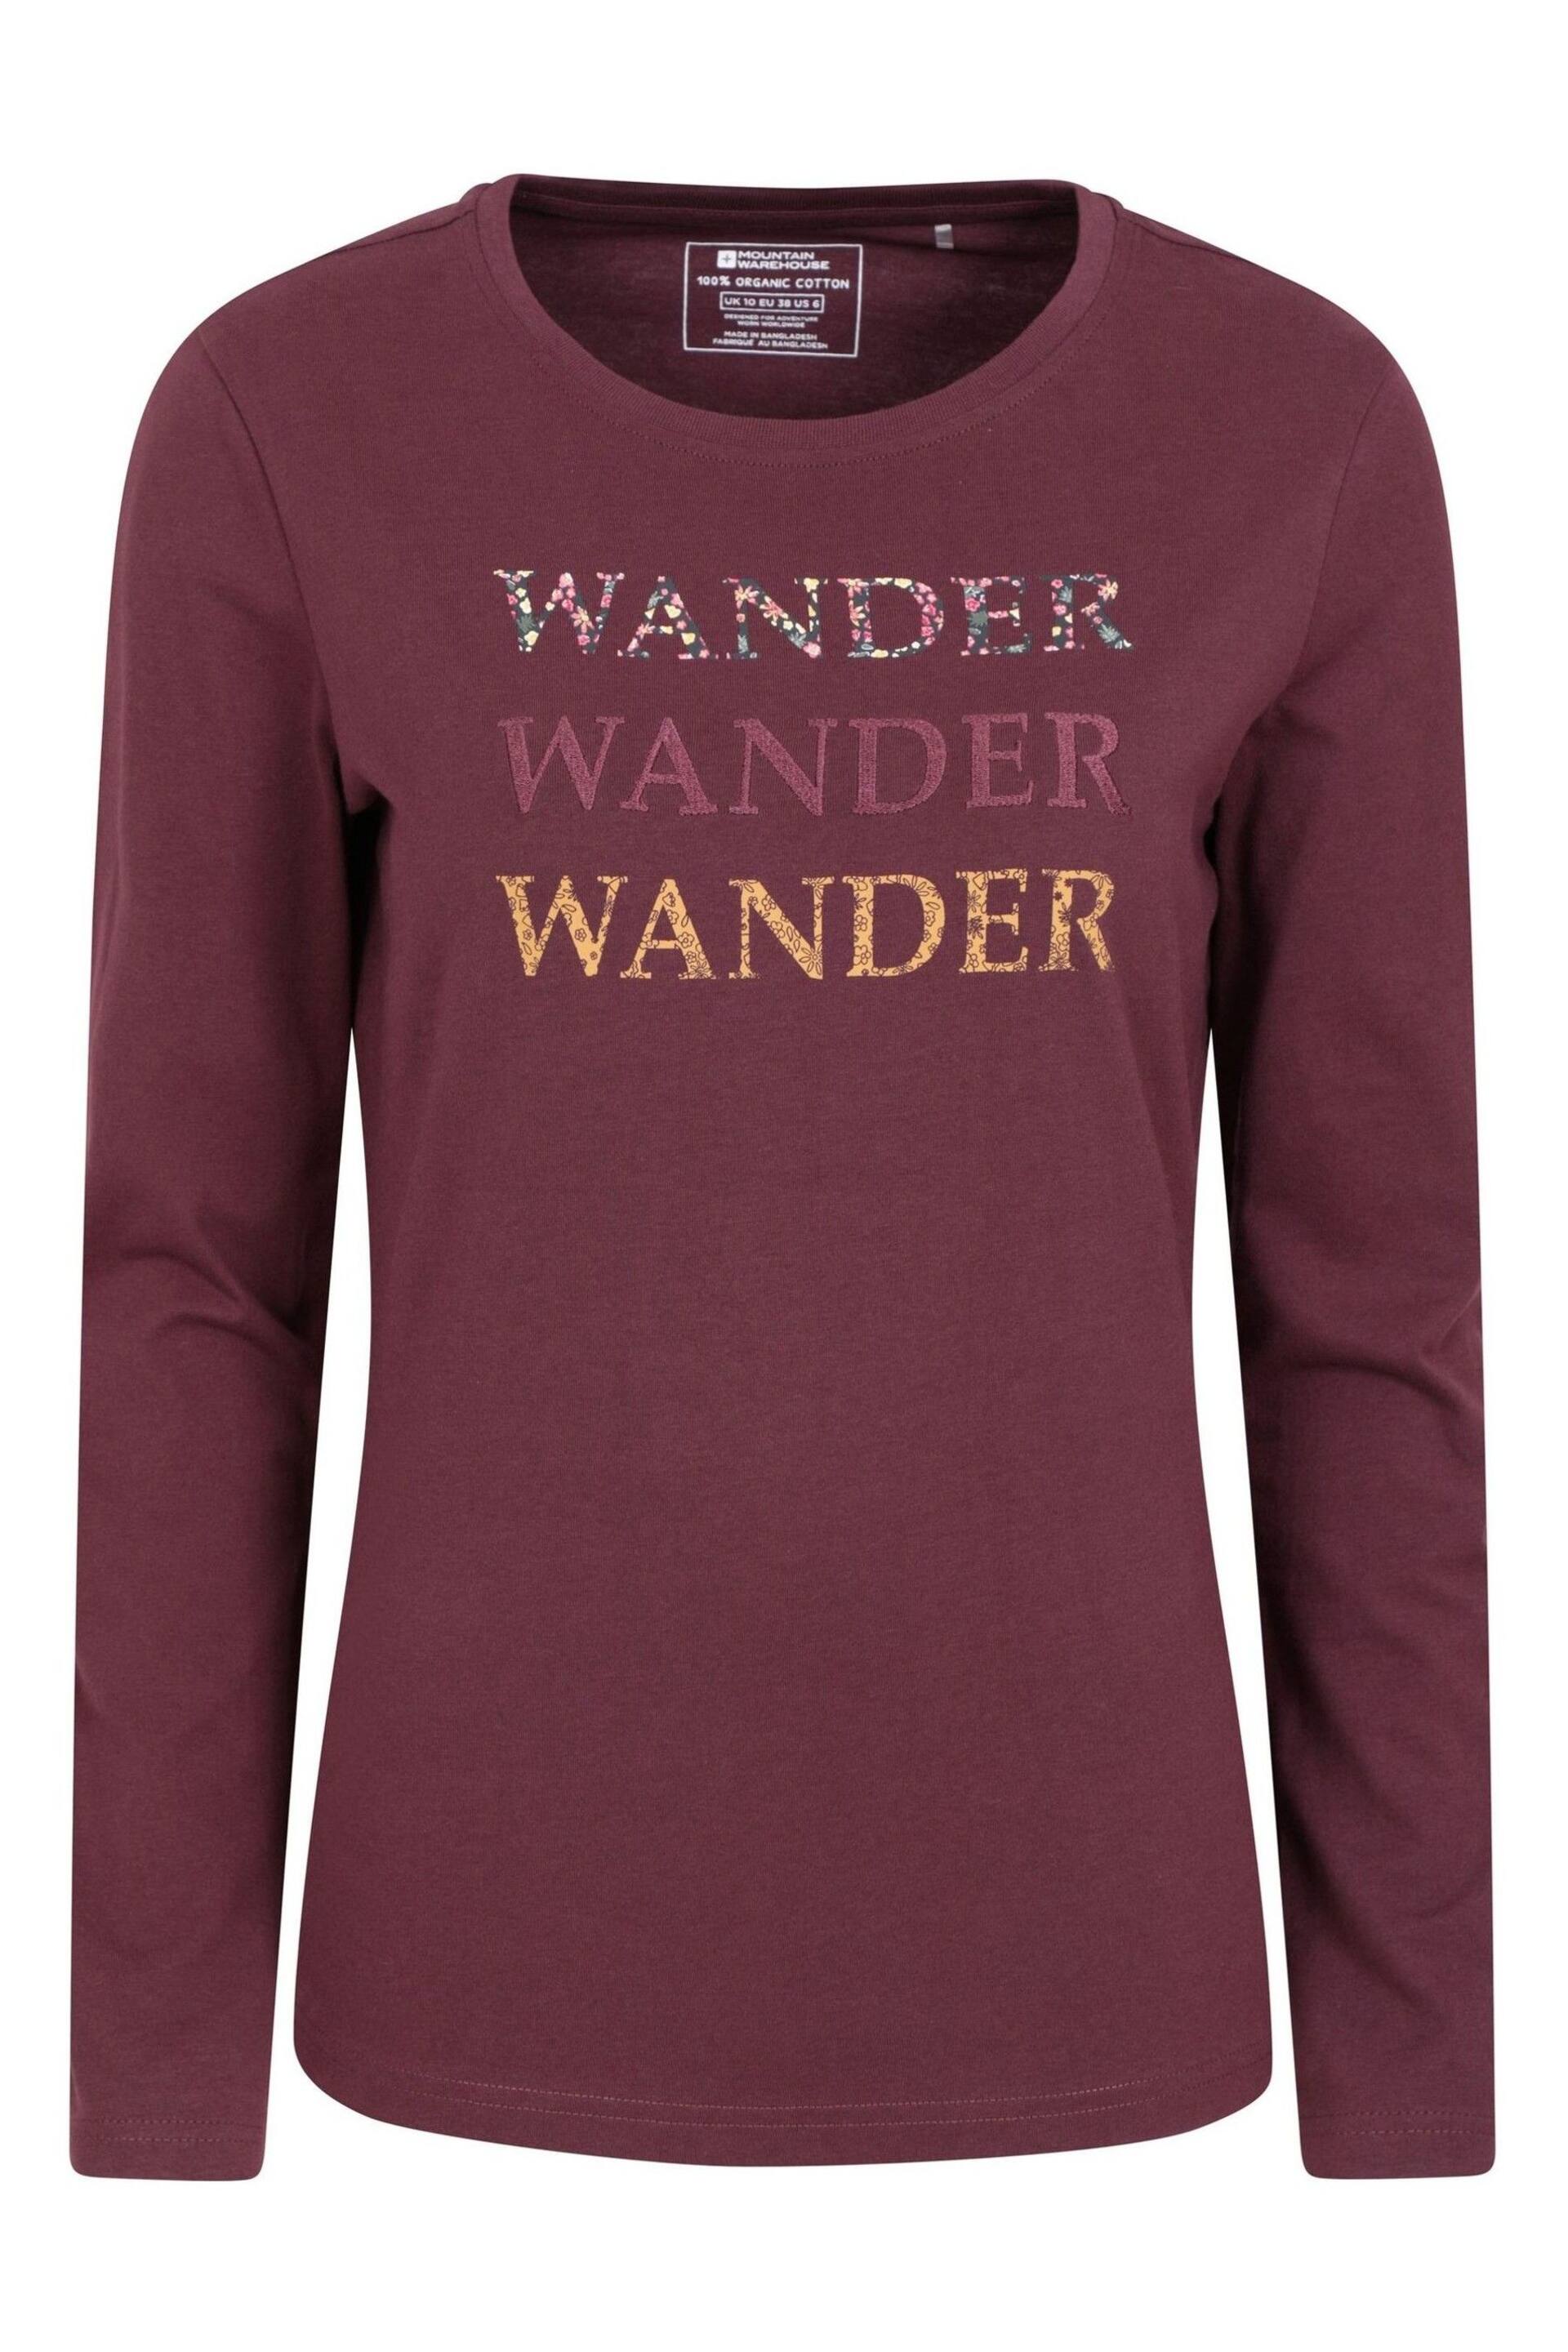 Mountain Warehouse Pink Womens Wander Printed T-Shirt - Image 4 of 8